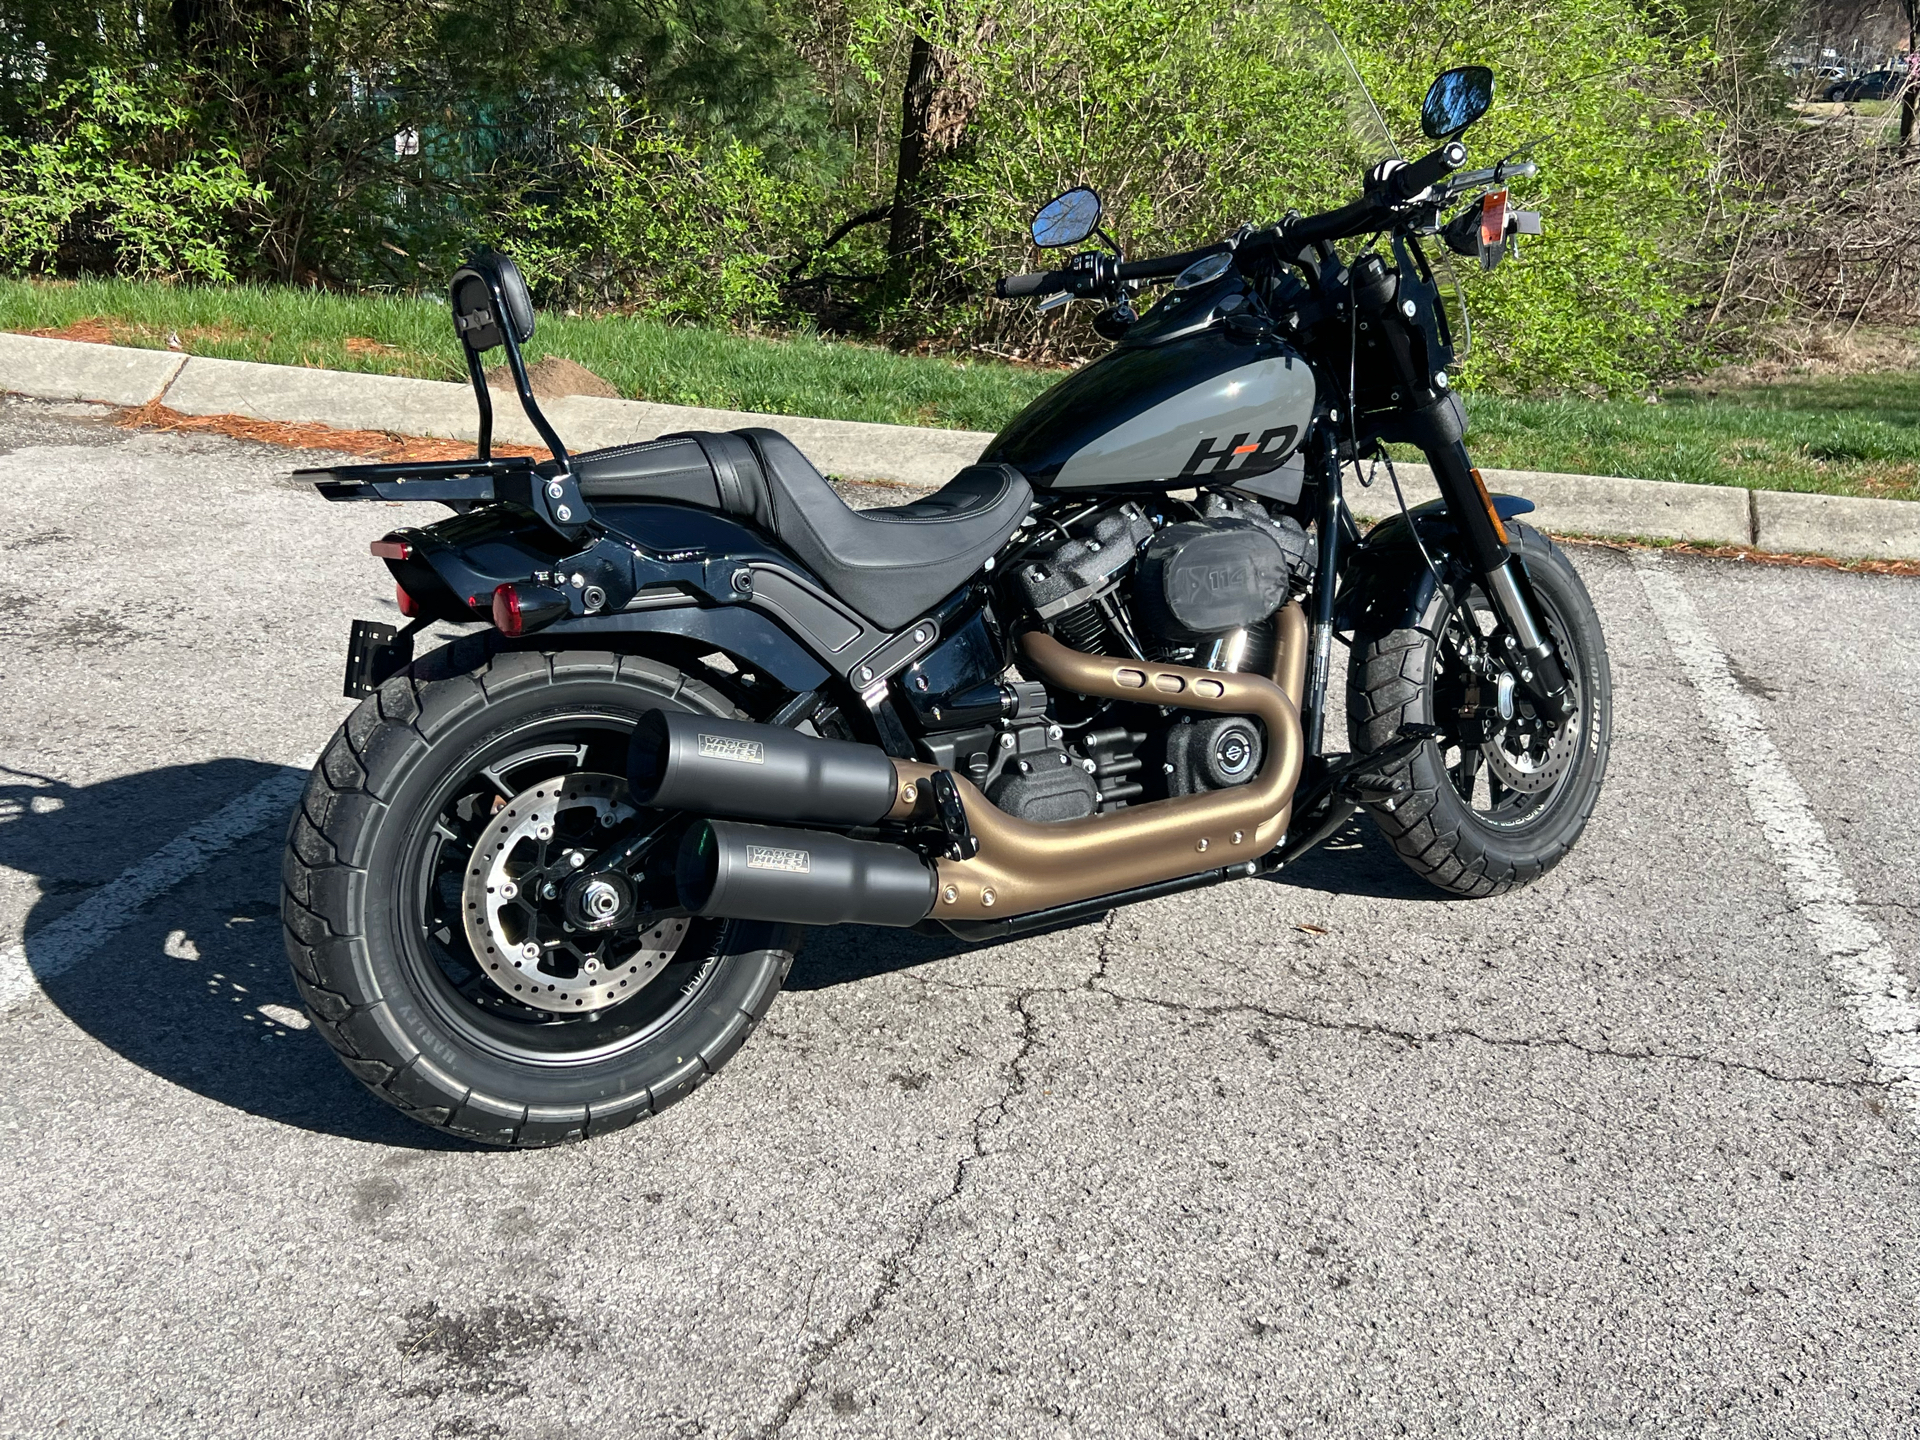 2022 Harley-Davidson Fat Bob® 114 in Franklin, Tennessee - Photo 10